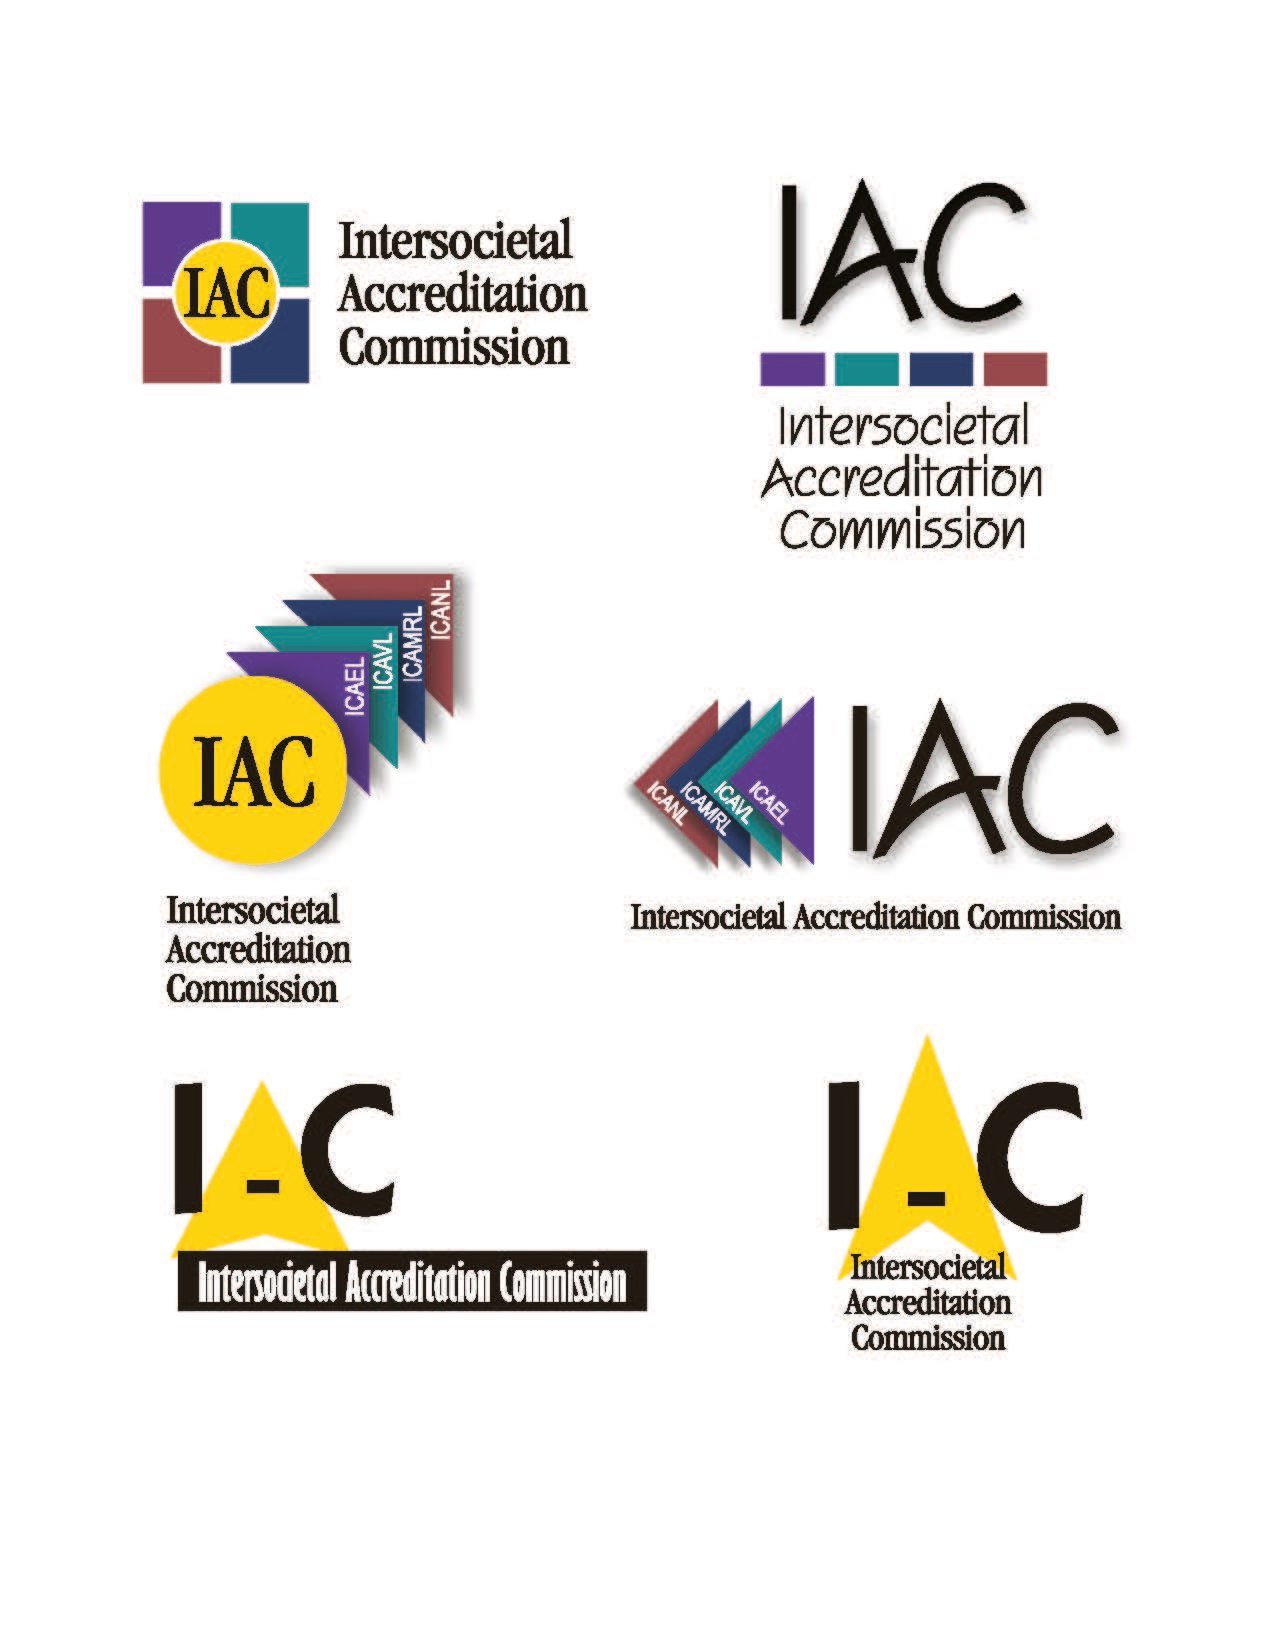 ICAVL Logo - Logo Design Samples by Cindy Morgan Chambers at Coroflot.com